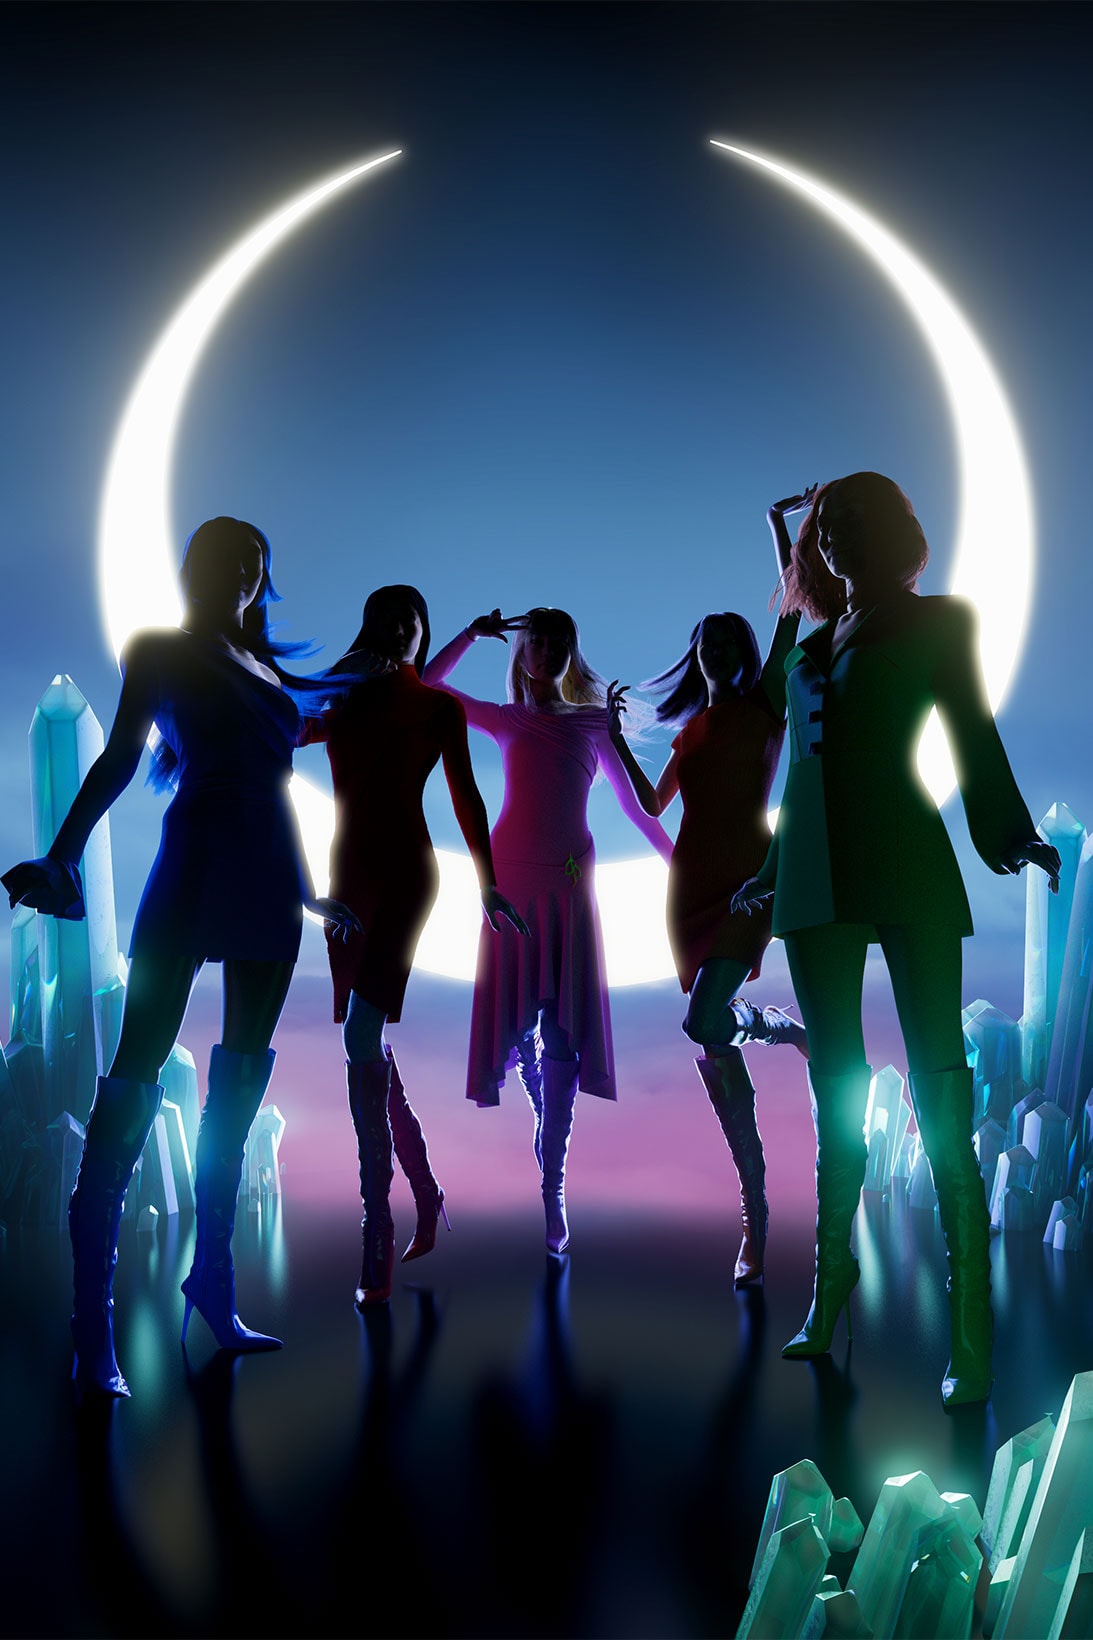 SG5 Japanese Girl Group Sailor Moon Collaboration SAYAKA, RURI, RUI, MIYUU, KAEDE Debut Info